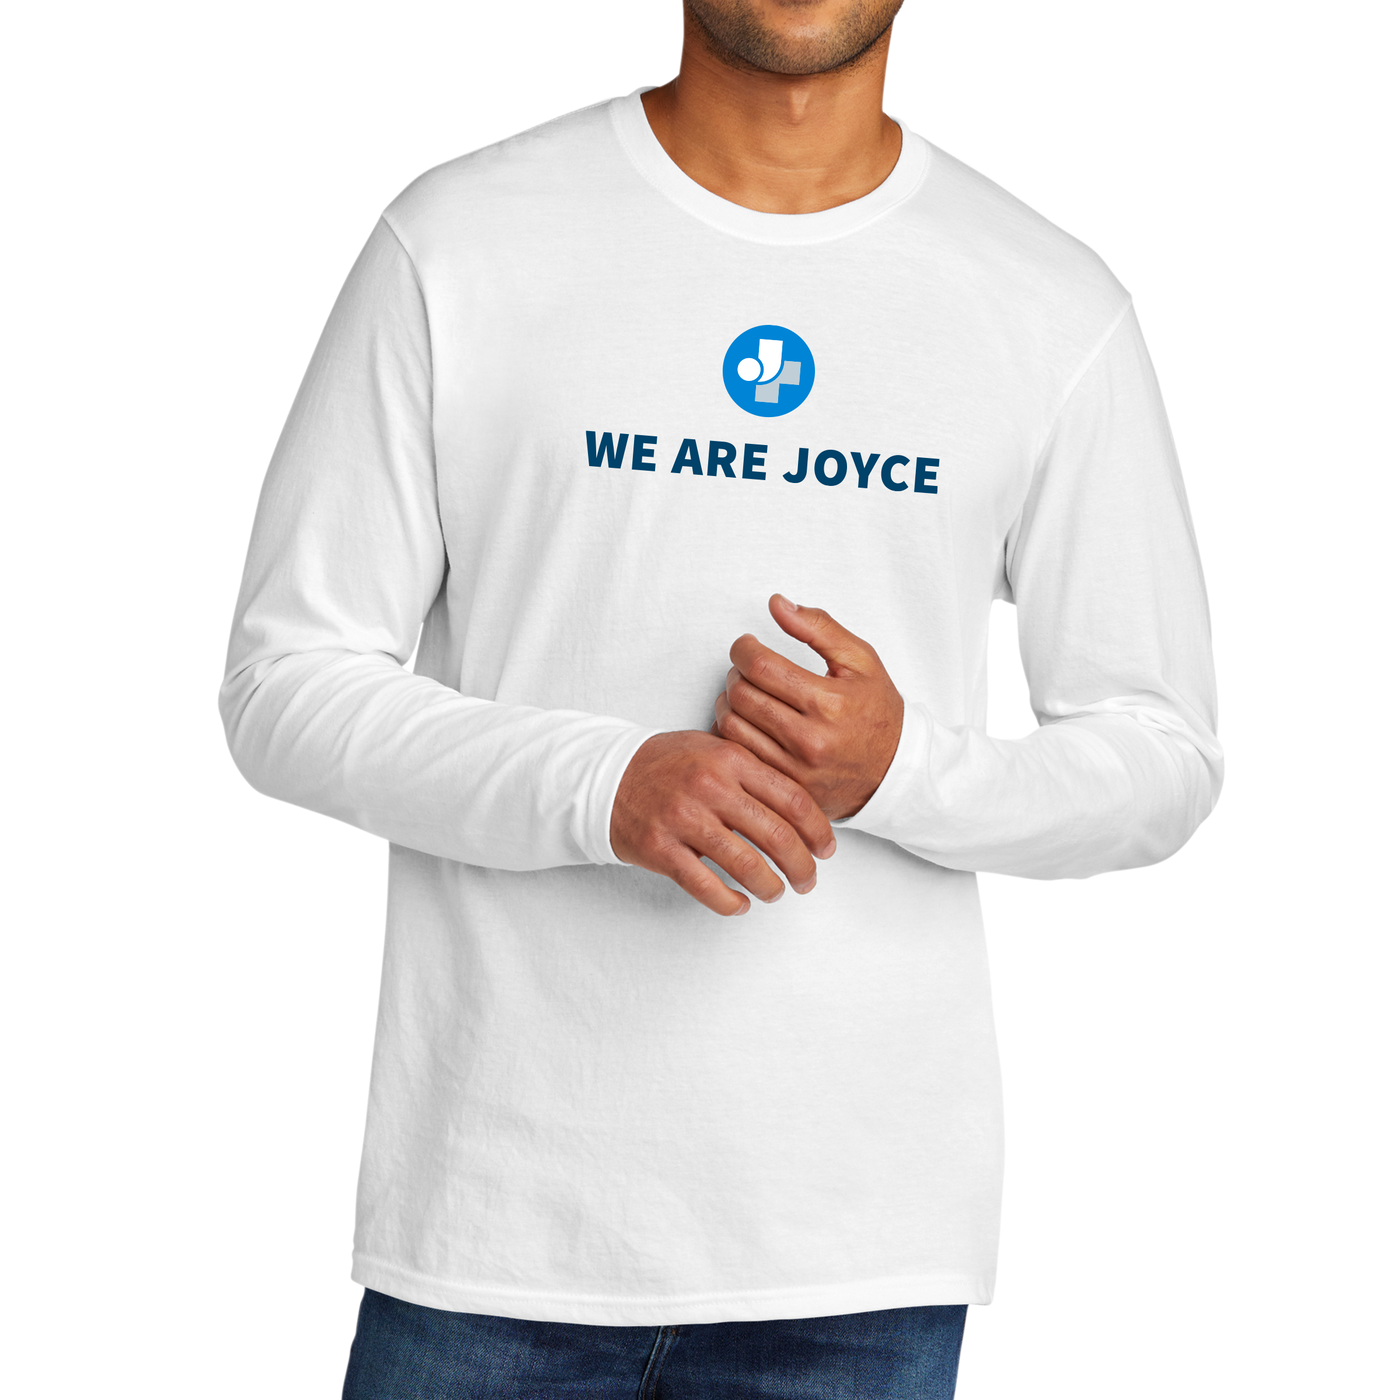 Port & Company® Tri-Blend Long Sleeve Tee - We Are Joyce